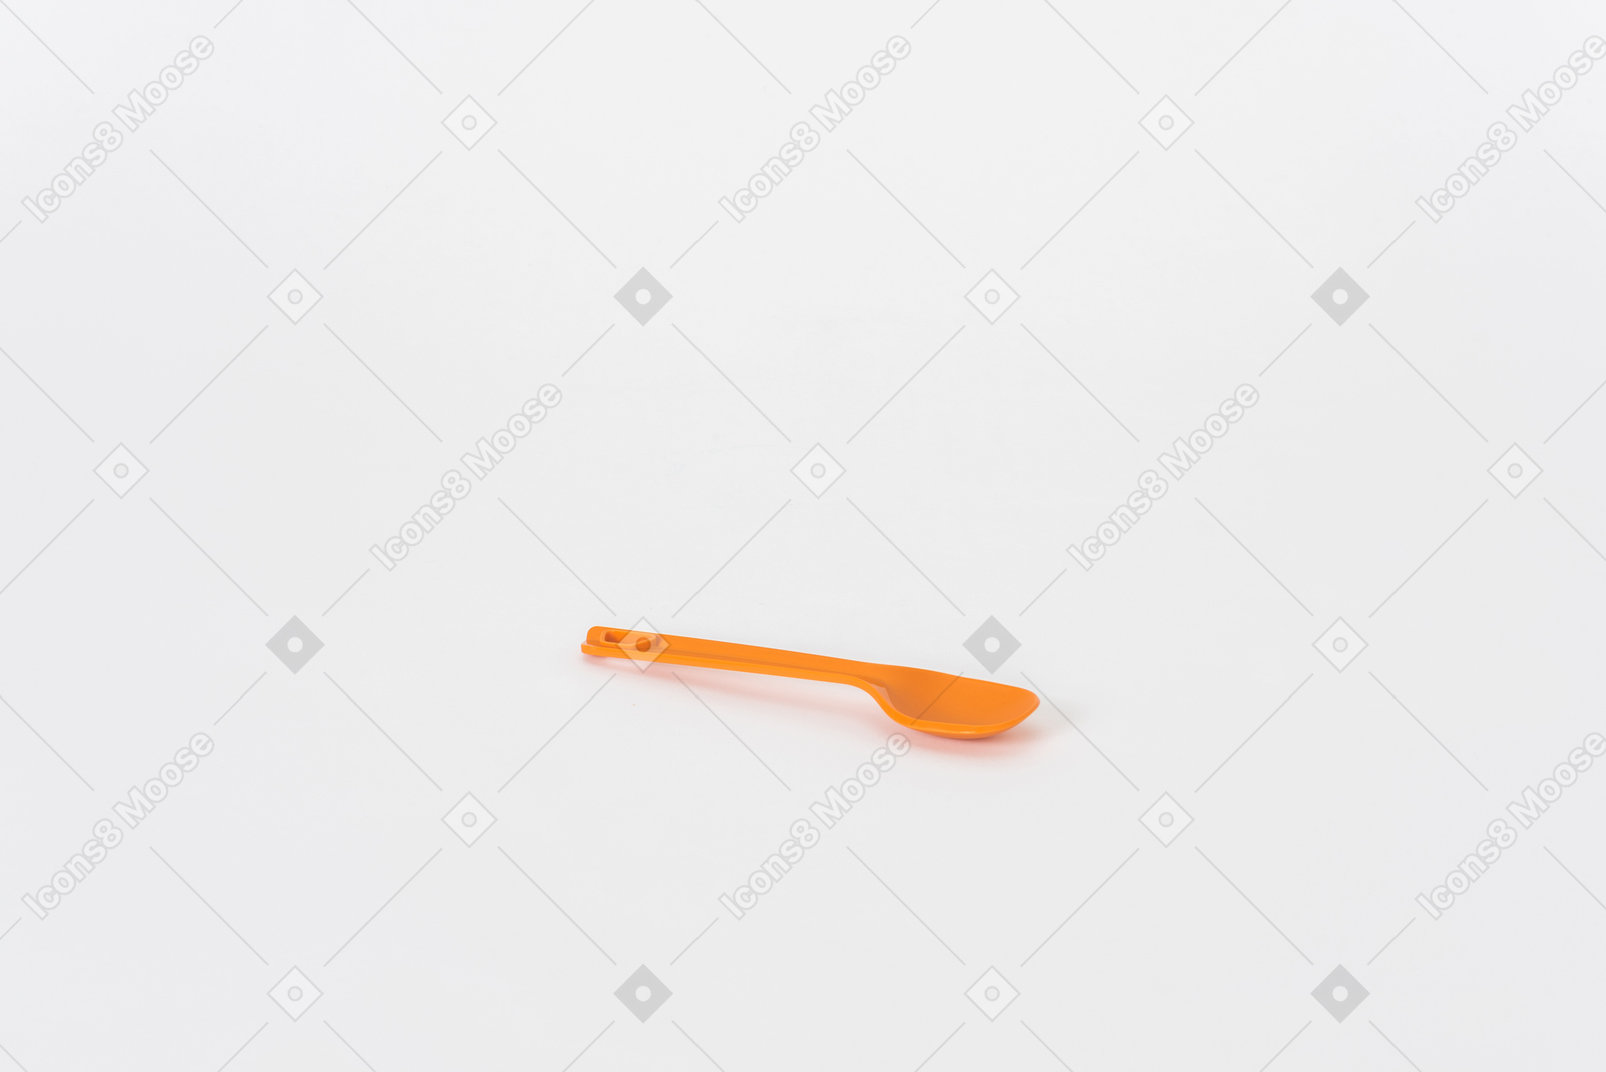 Plastic orange spoon on a white background